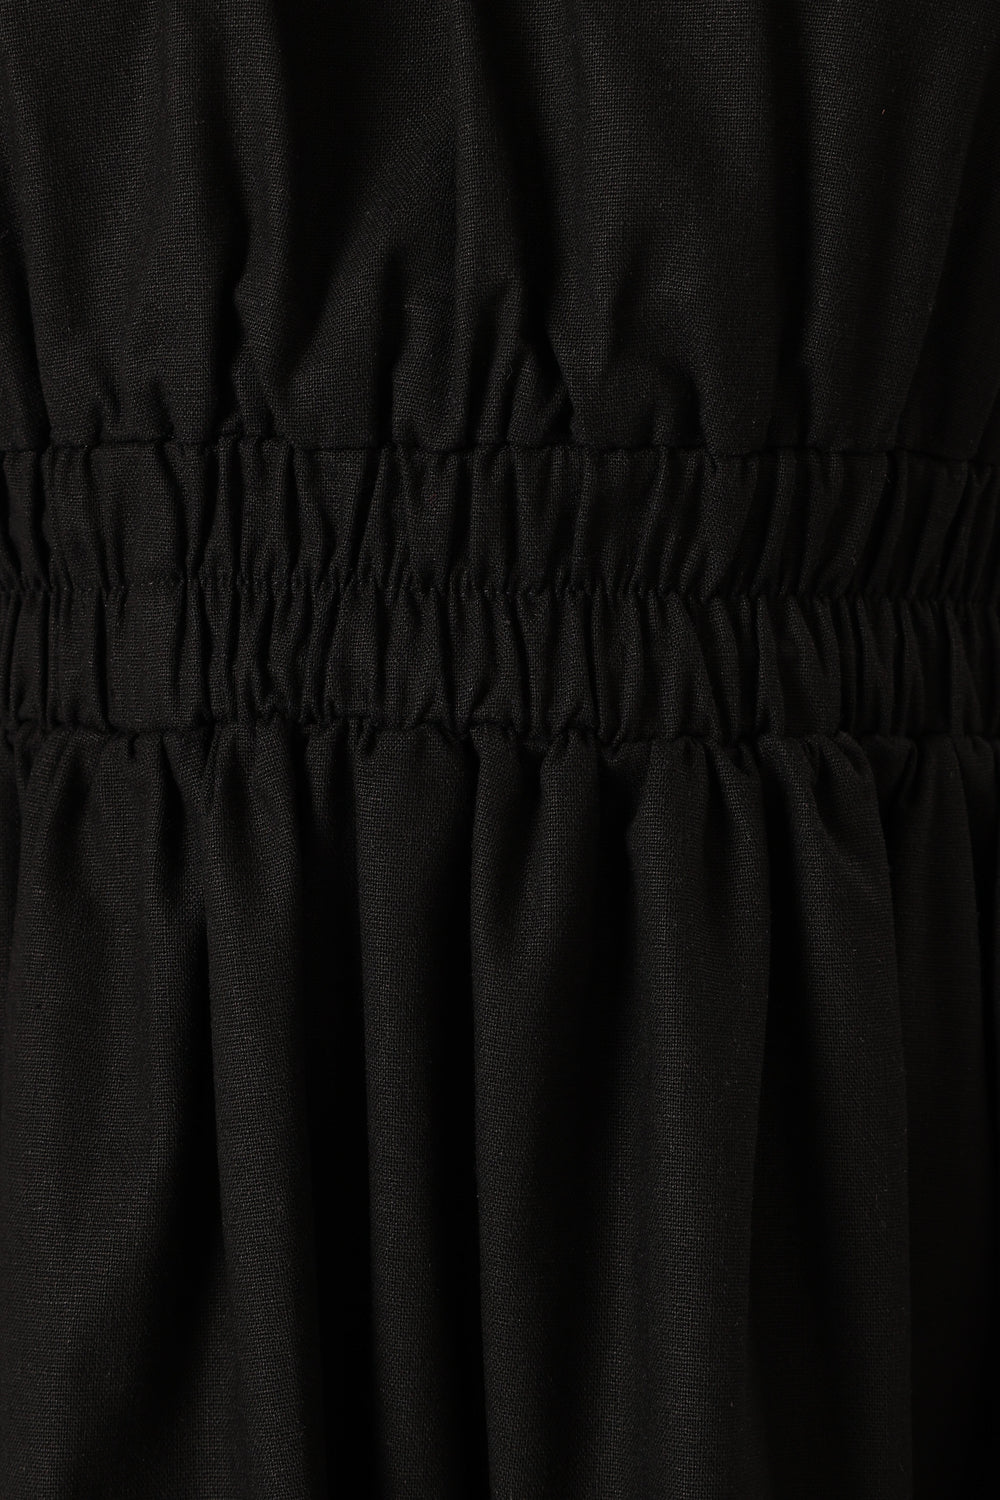 DRESSES @Kailey One Shoulder Maxi Dress - Black